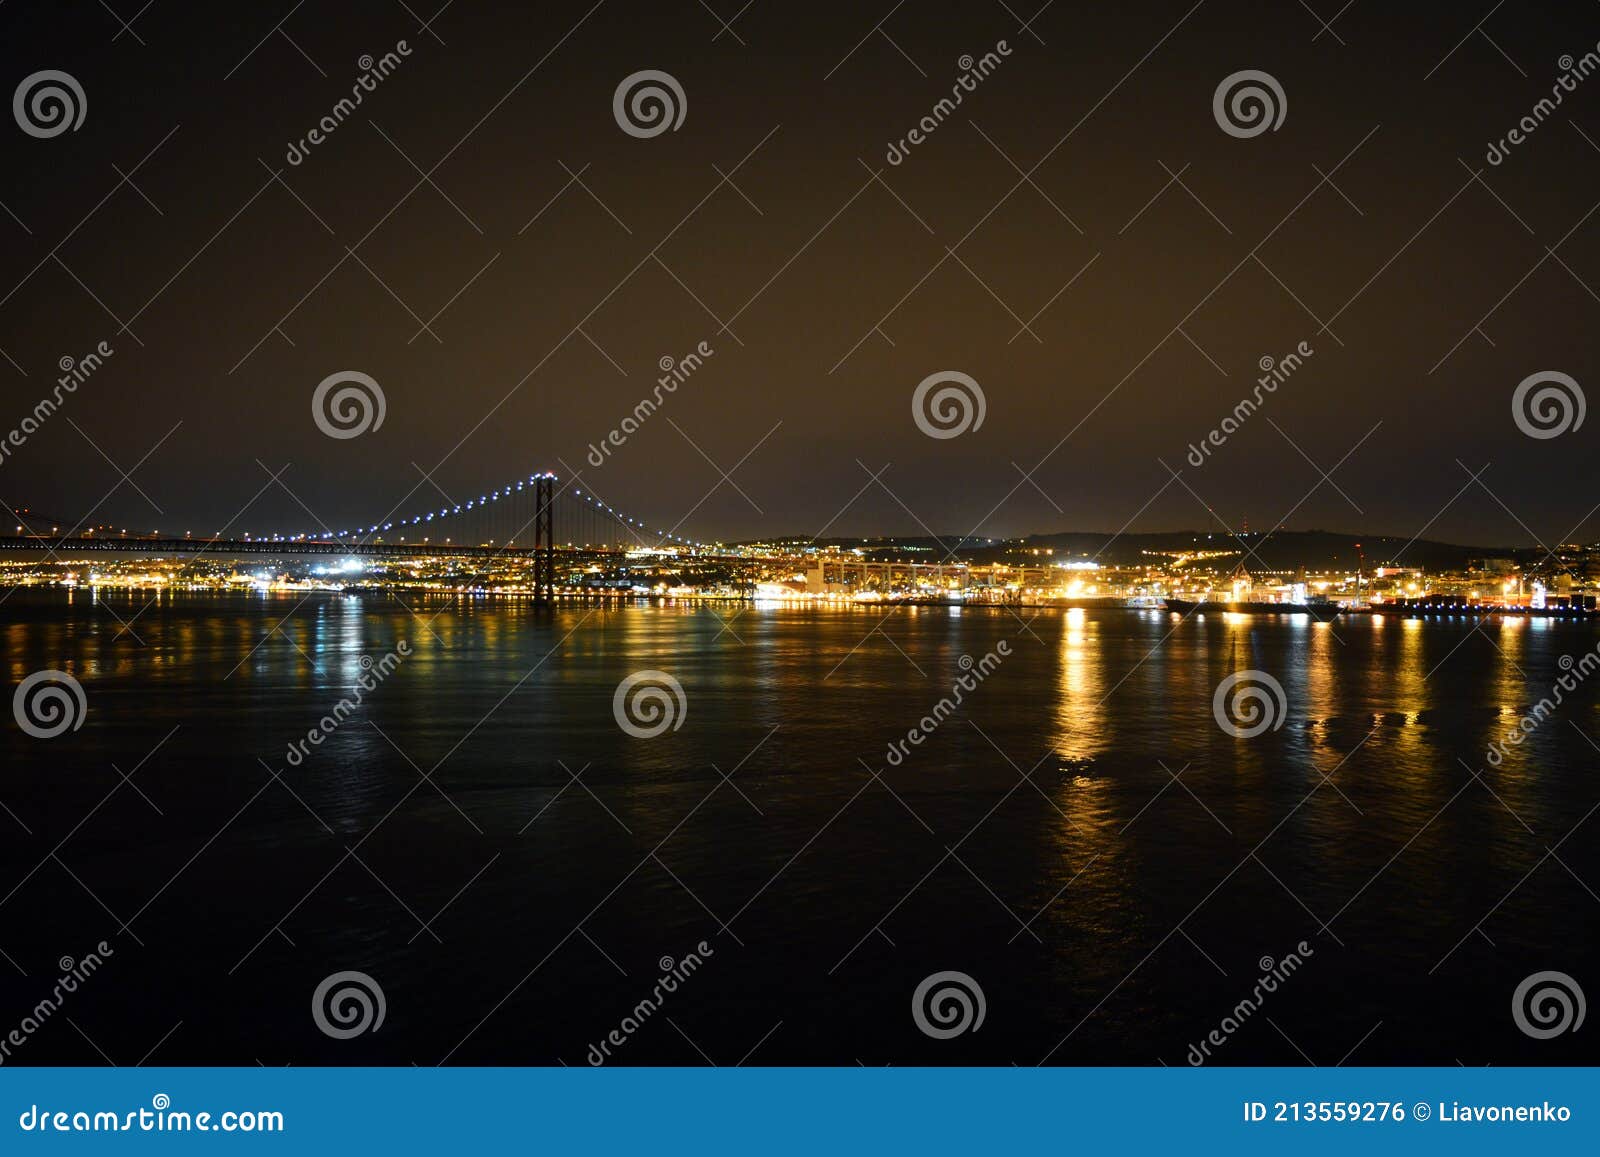 night tejo river. 25thth april bridge. lisbon. almada. portugal. nightscene. lights  colors dark background. landscape